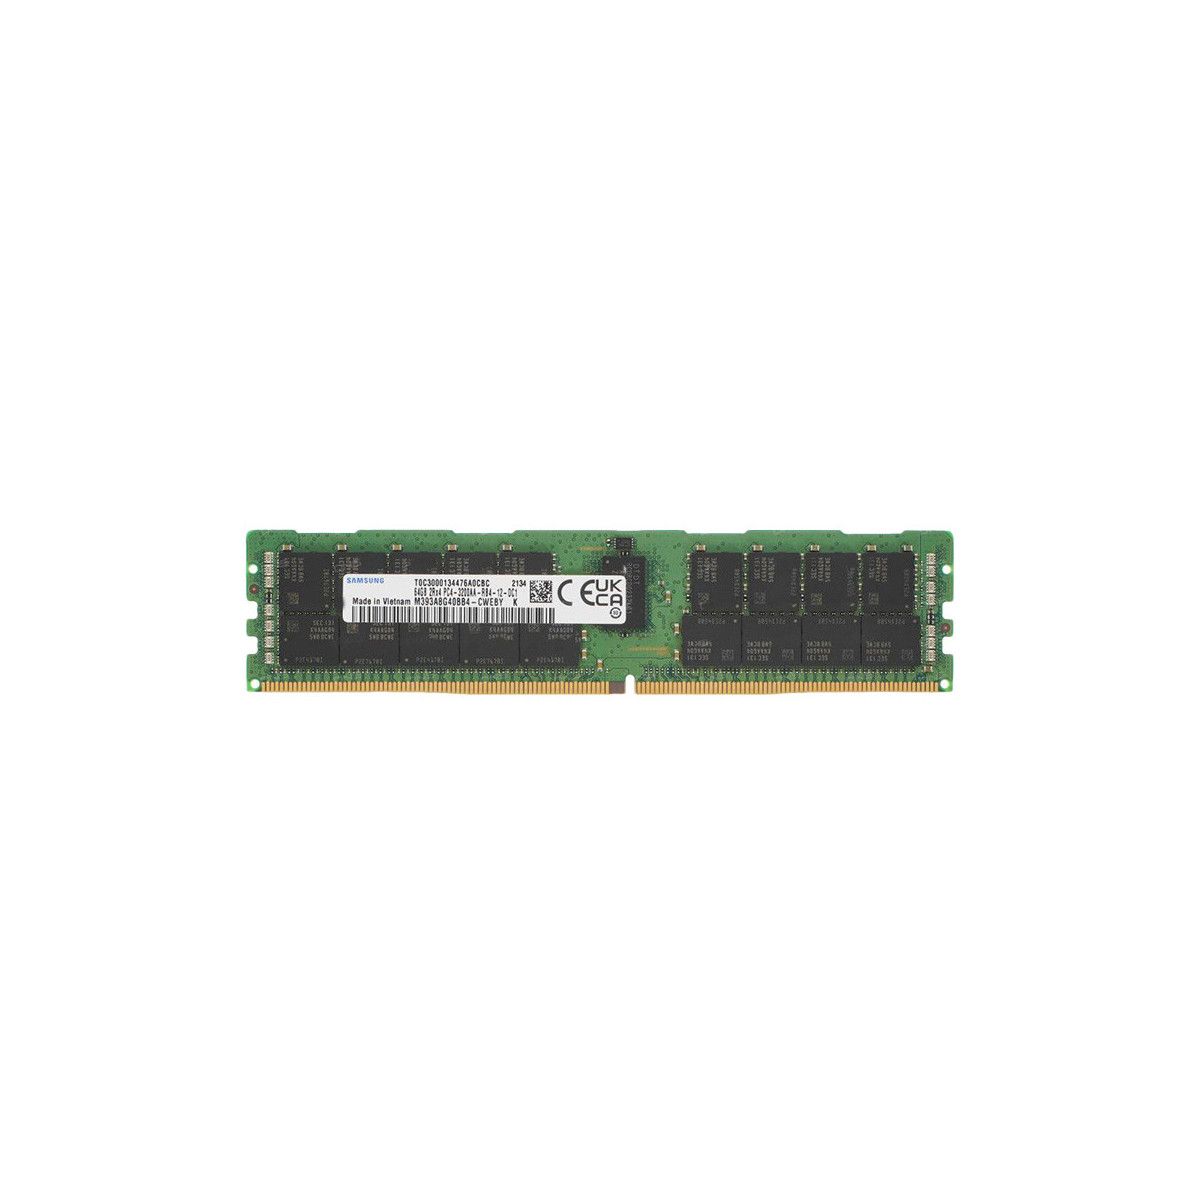 P2MYX-MS - Memstar 1x 64GB DDR4-3200 RDIMM PC4-25600R - Mem-Star Kompatibel OEM Speichermedien 1 - Memstar 